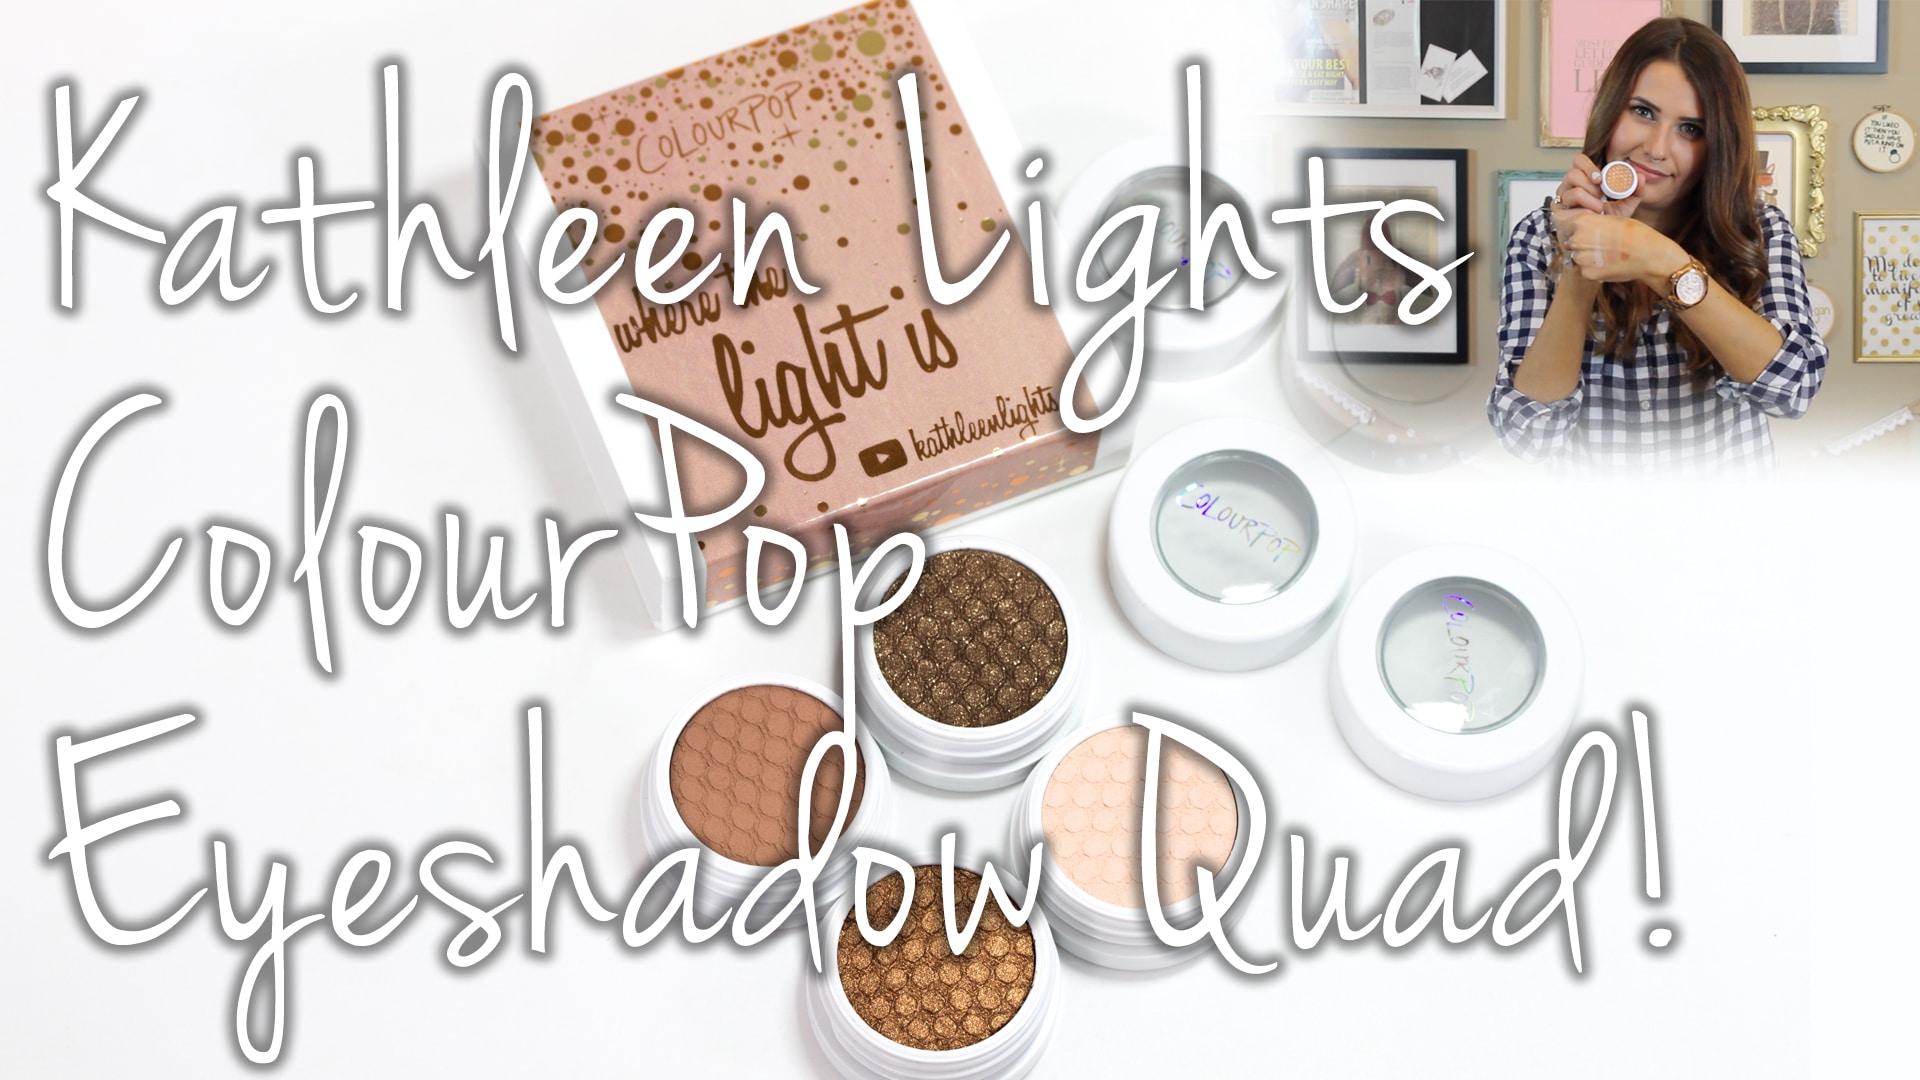 Where The Light Is Eyeshadow Quad (KathleenLights x ColourPop) Video